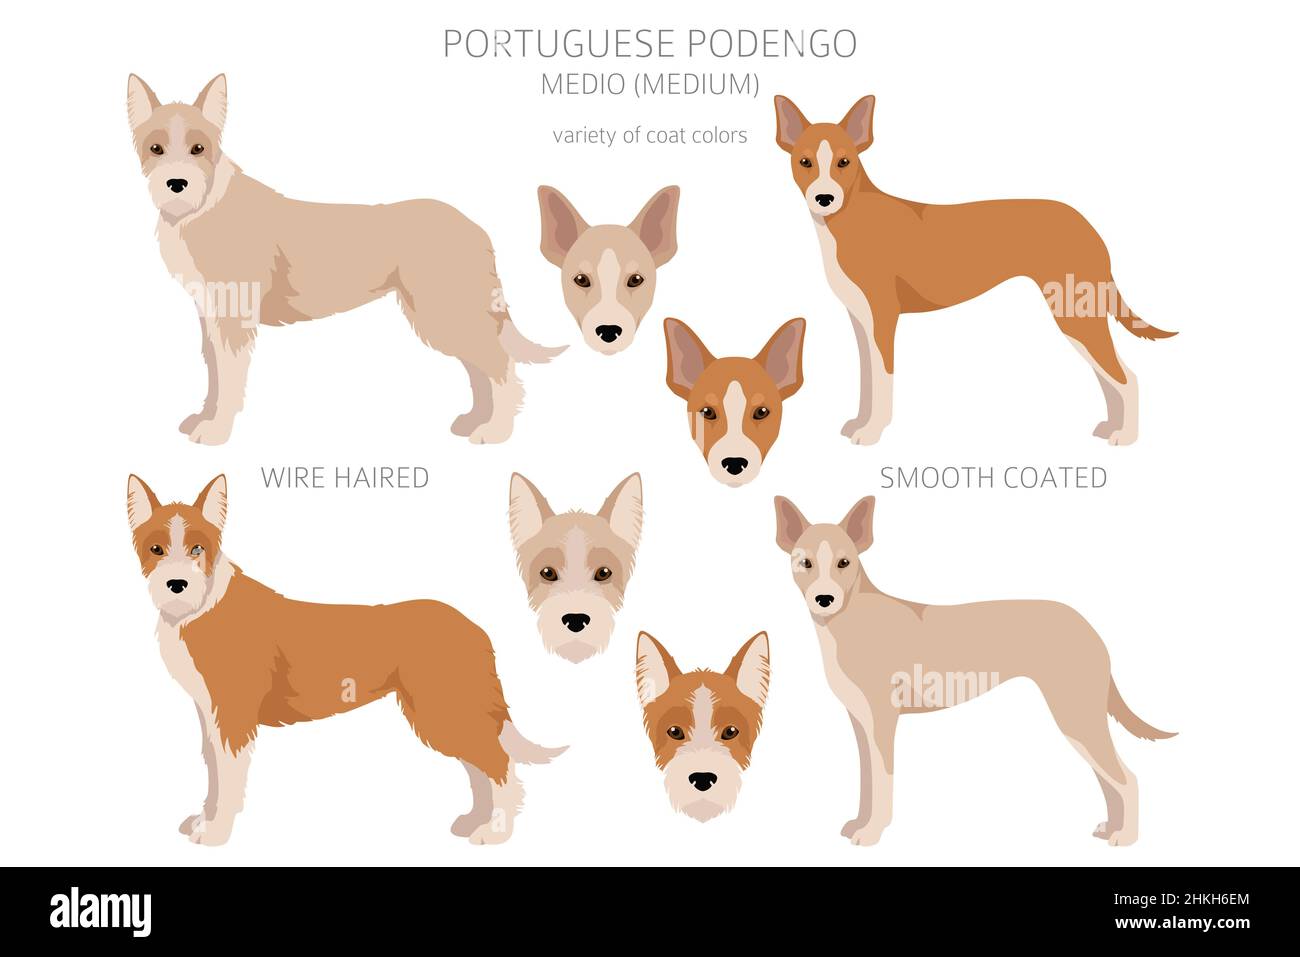 Portuguese Podengo Medio clipart. Different poses, coat colors set.  Vector illustration Stock Vector